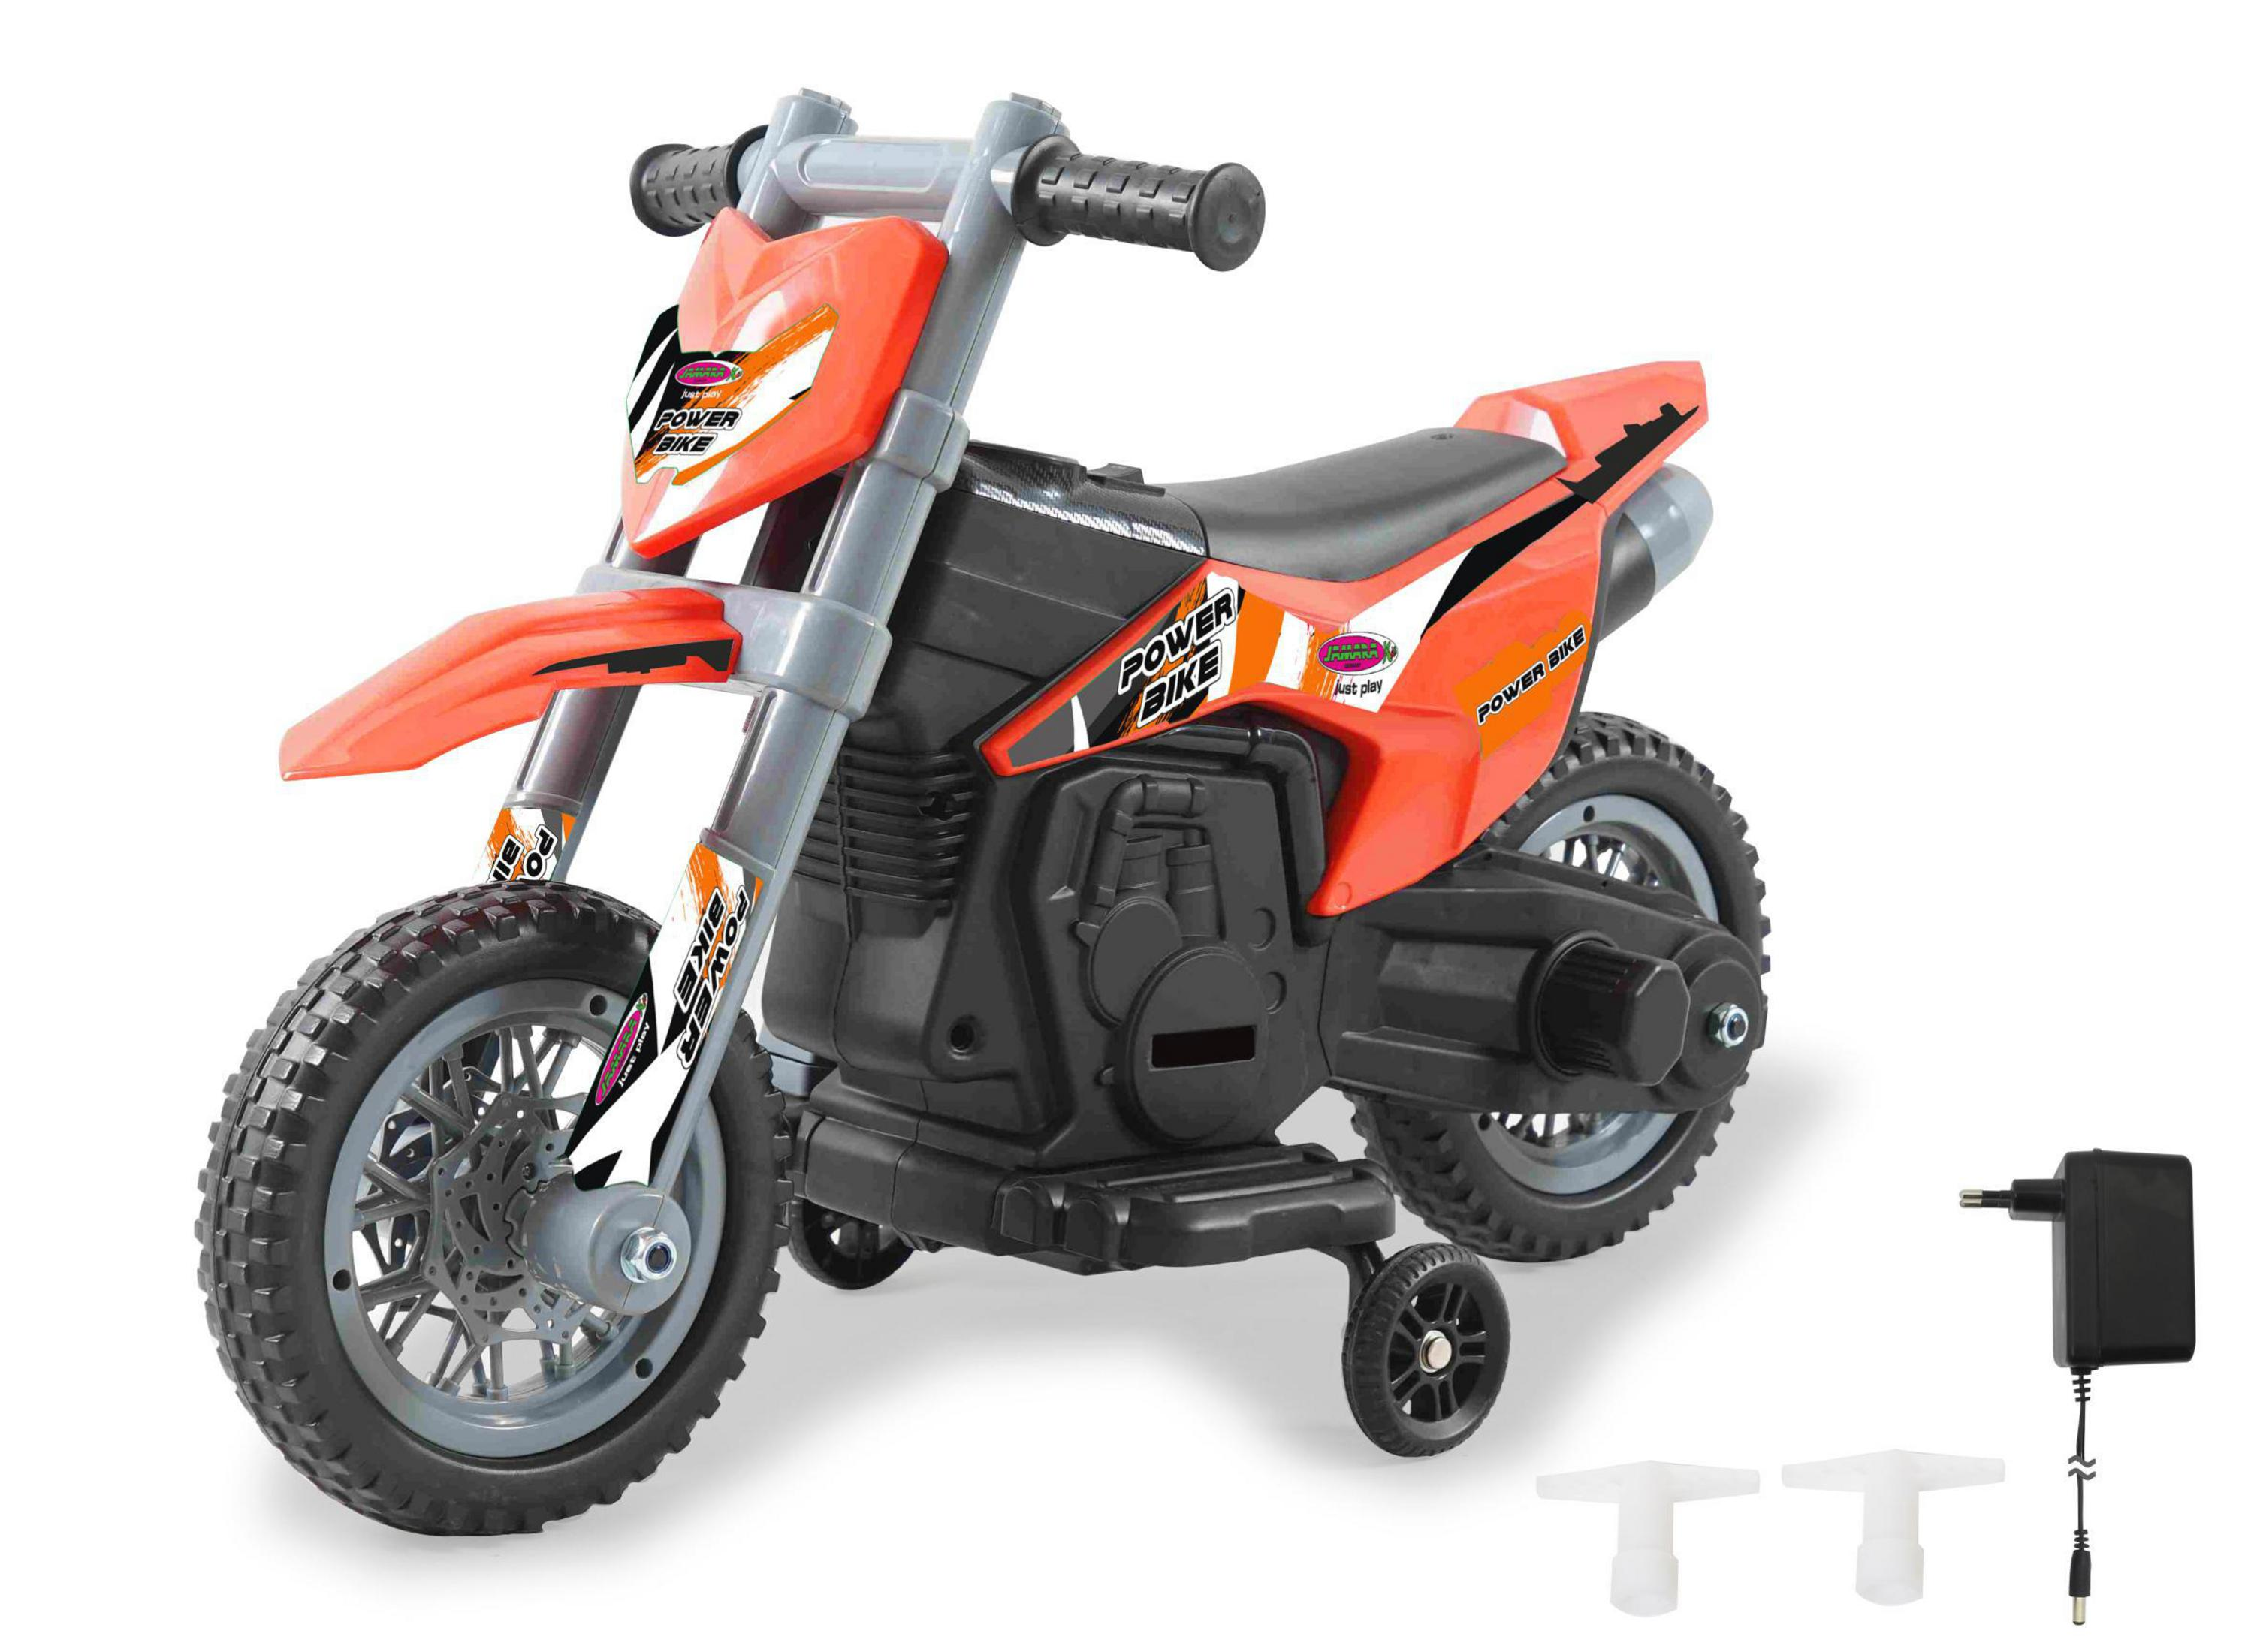 MOTORRAD Ride-On JAMARA ORANGE 460679 Orange RIDE-ON POWER BIKE Kinderfahrzeug, 6V